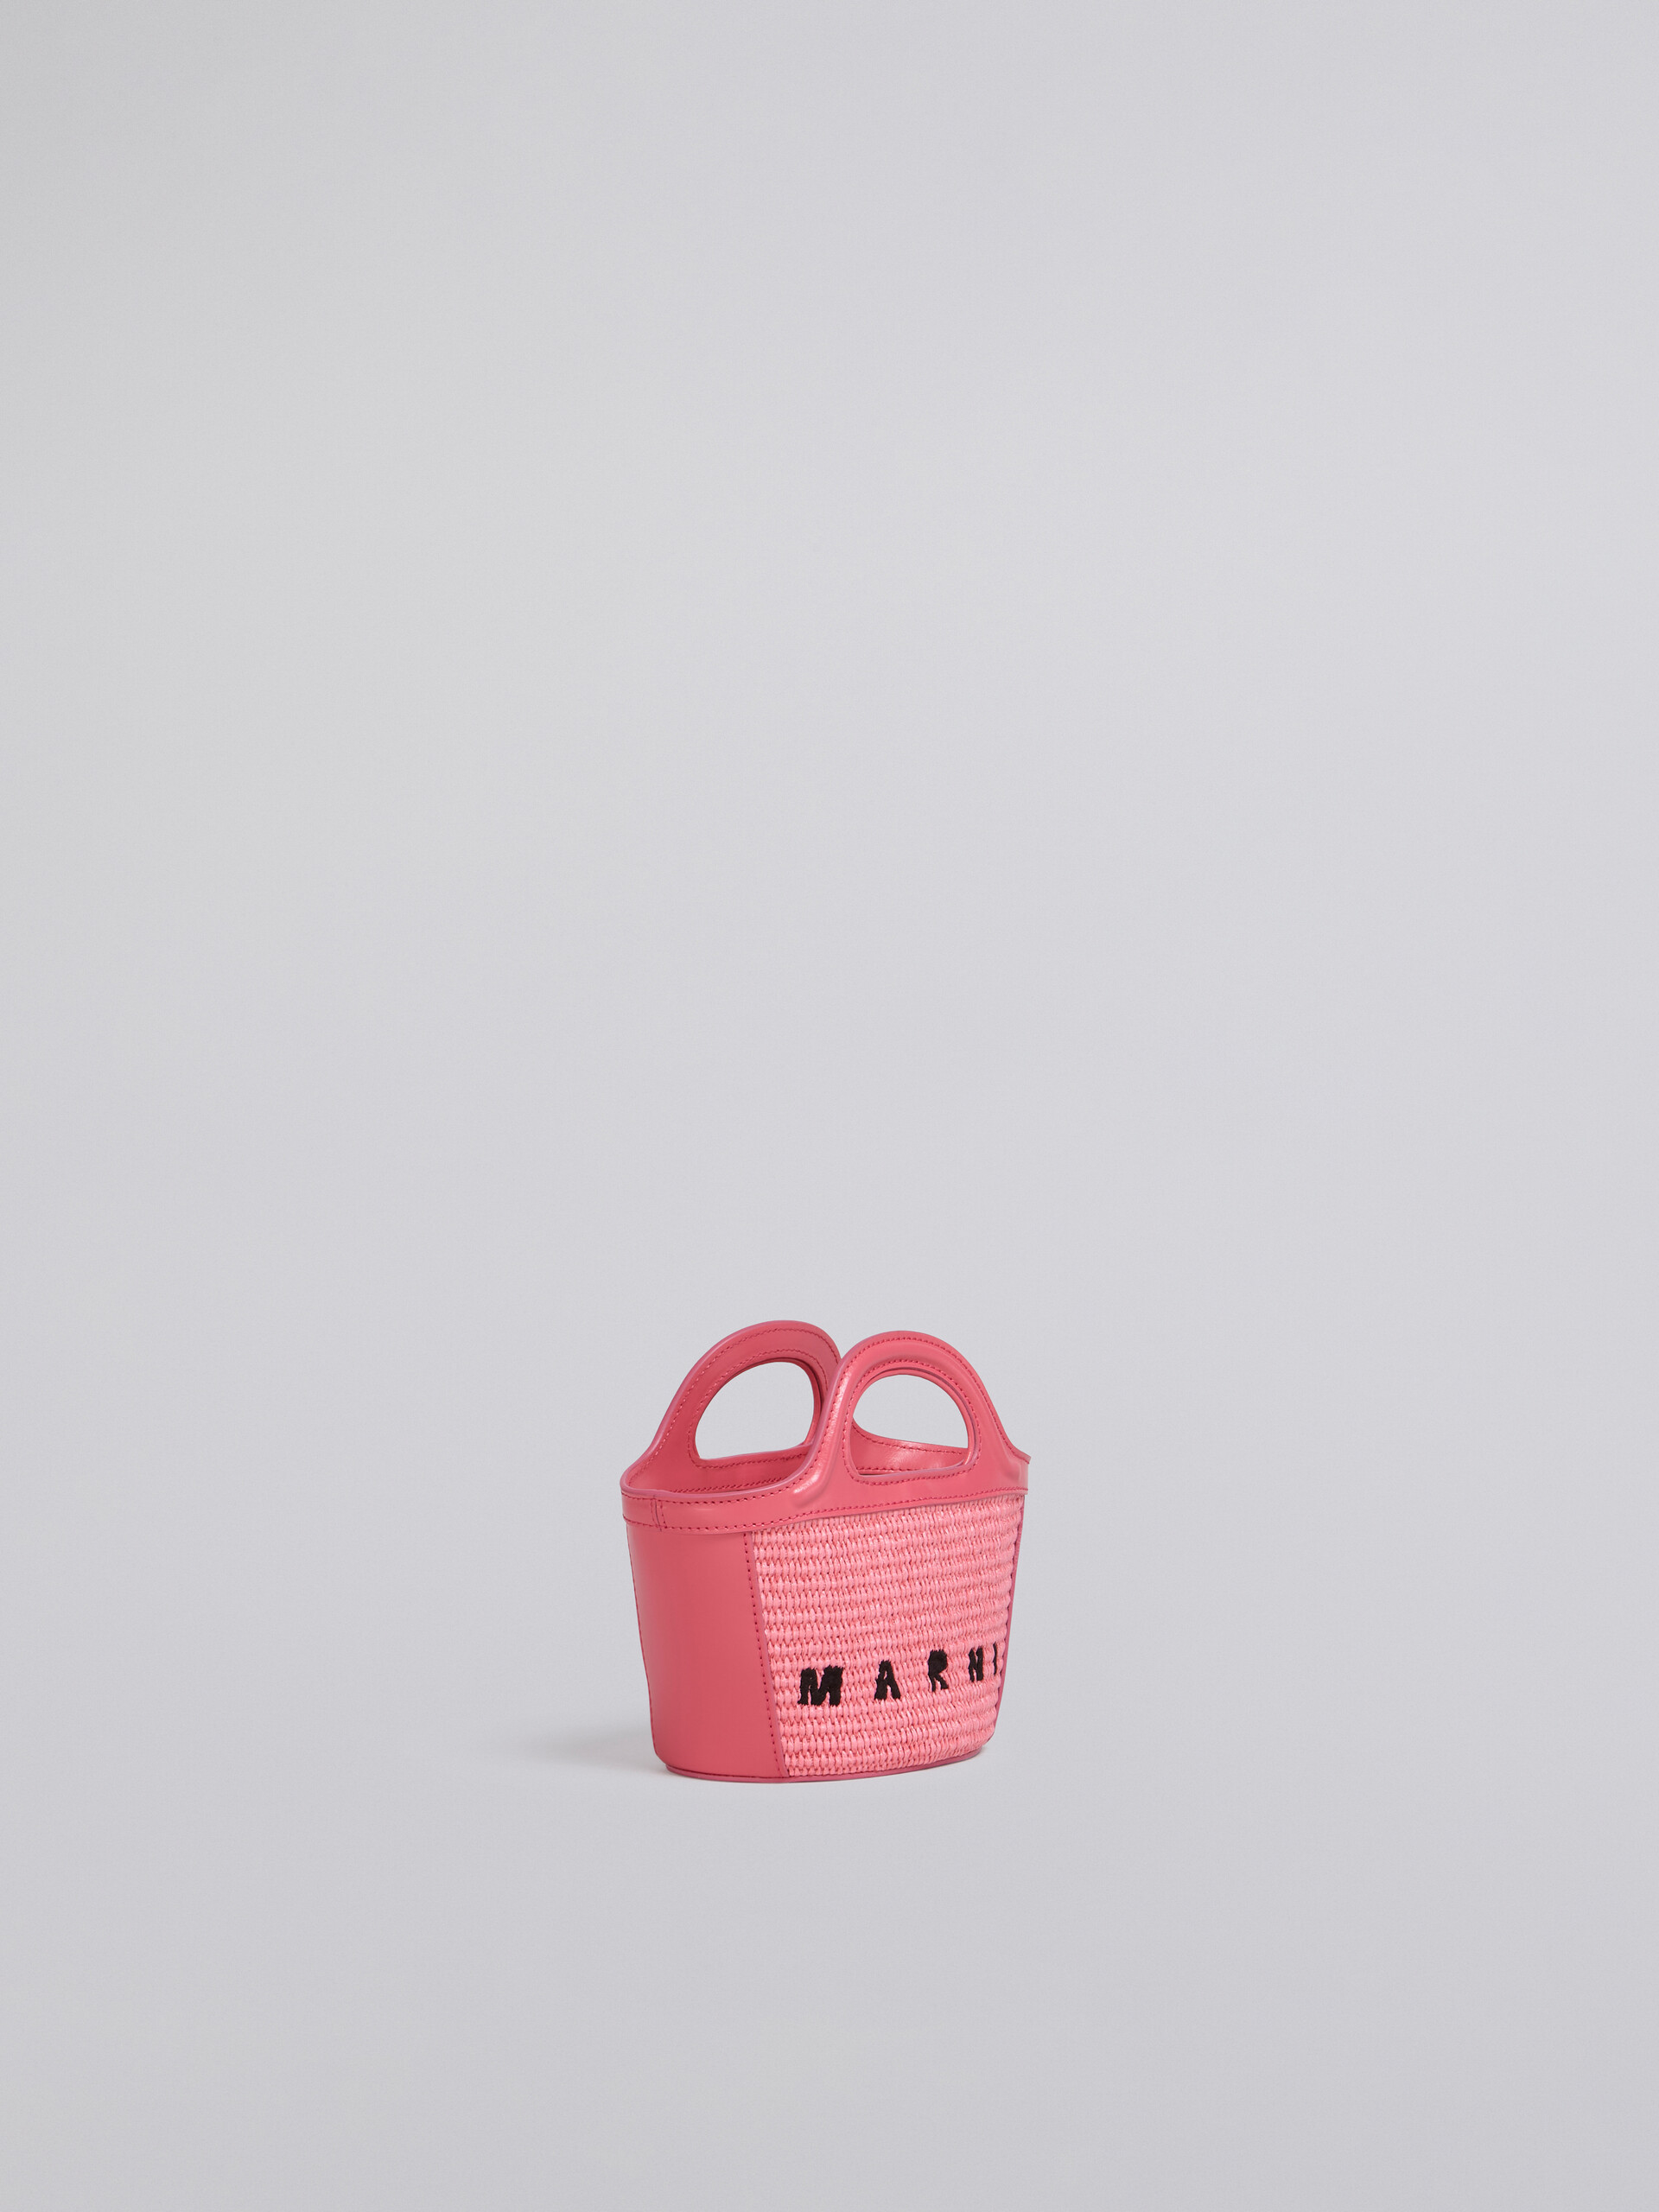 TROPICALIA micro bag in pink leather and raffia - Handbag - Image 6